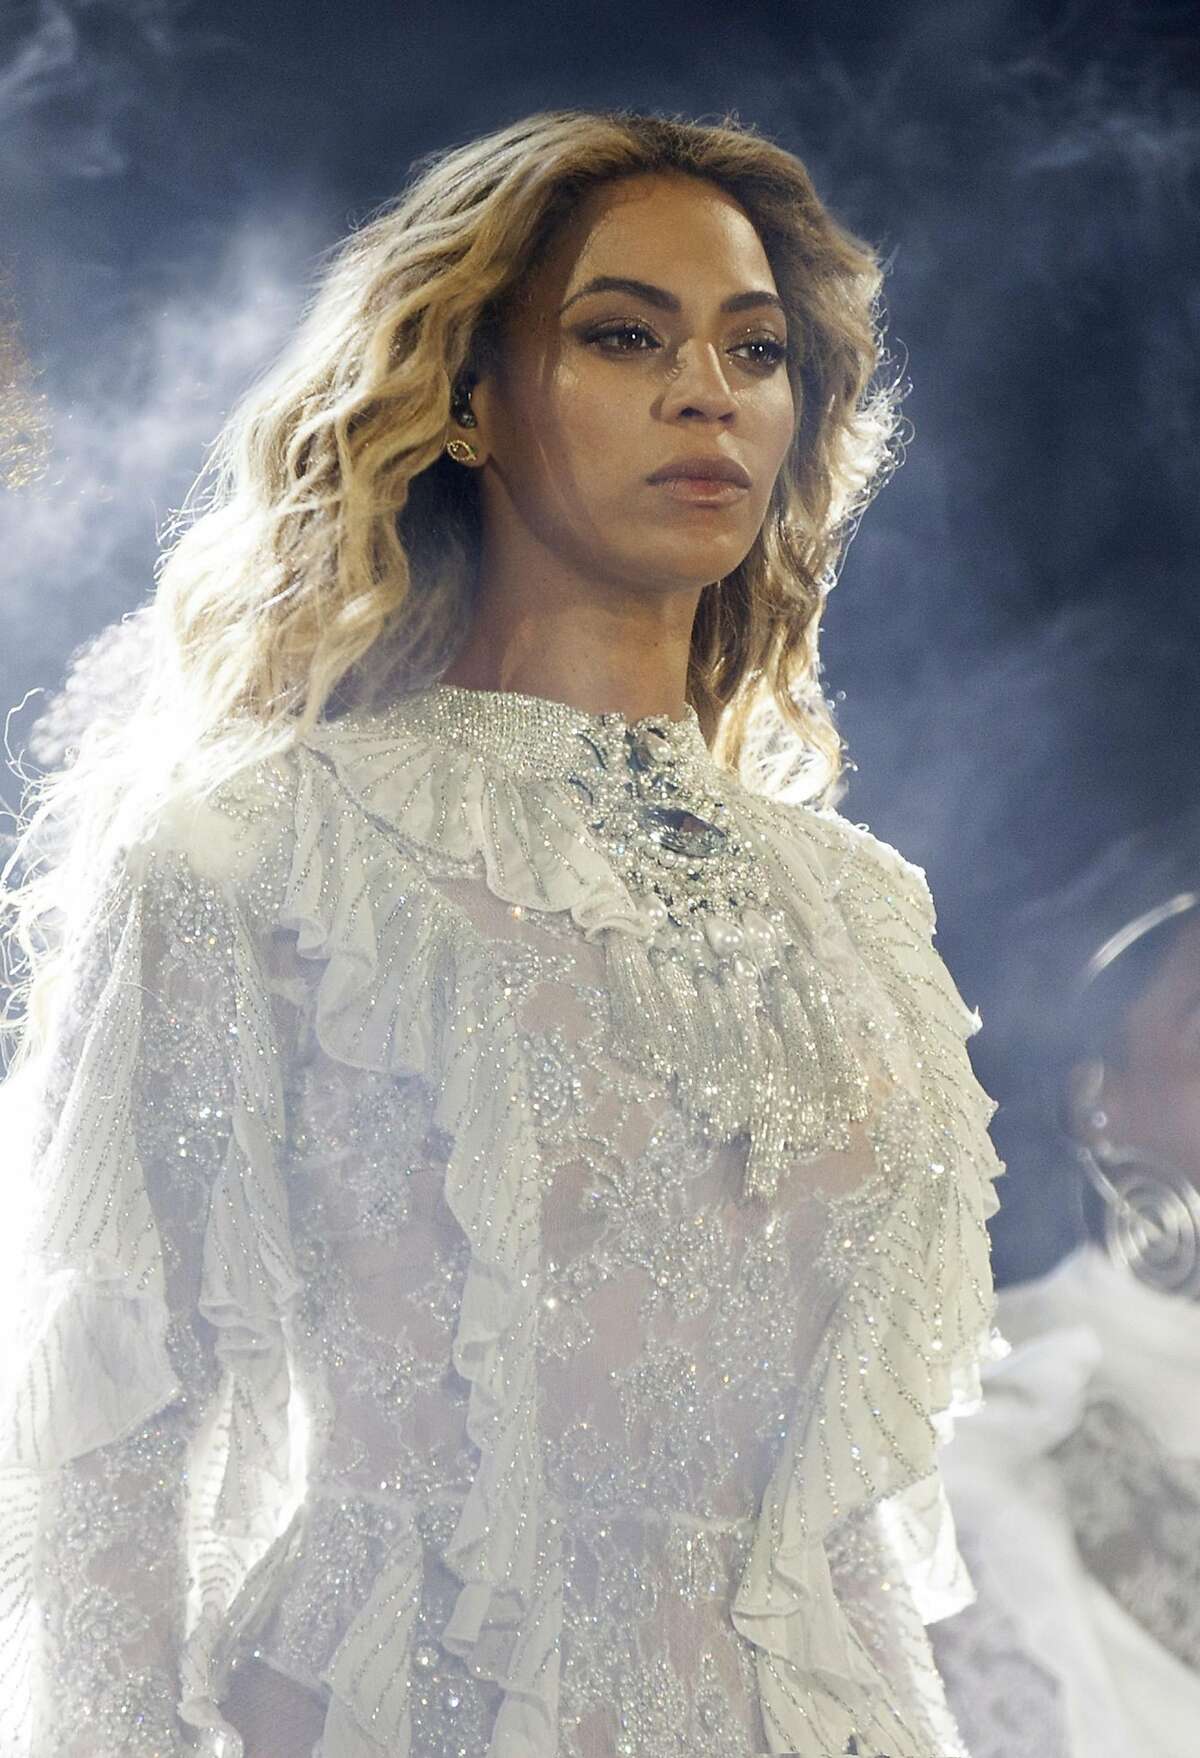 Scorned Beyoncé brings urgency, anger to Levi's Stadium